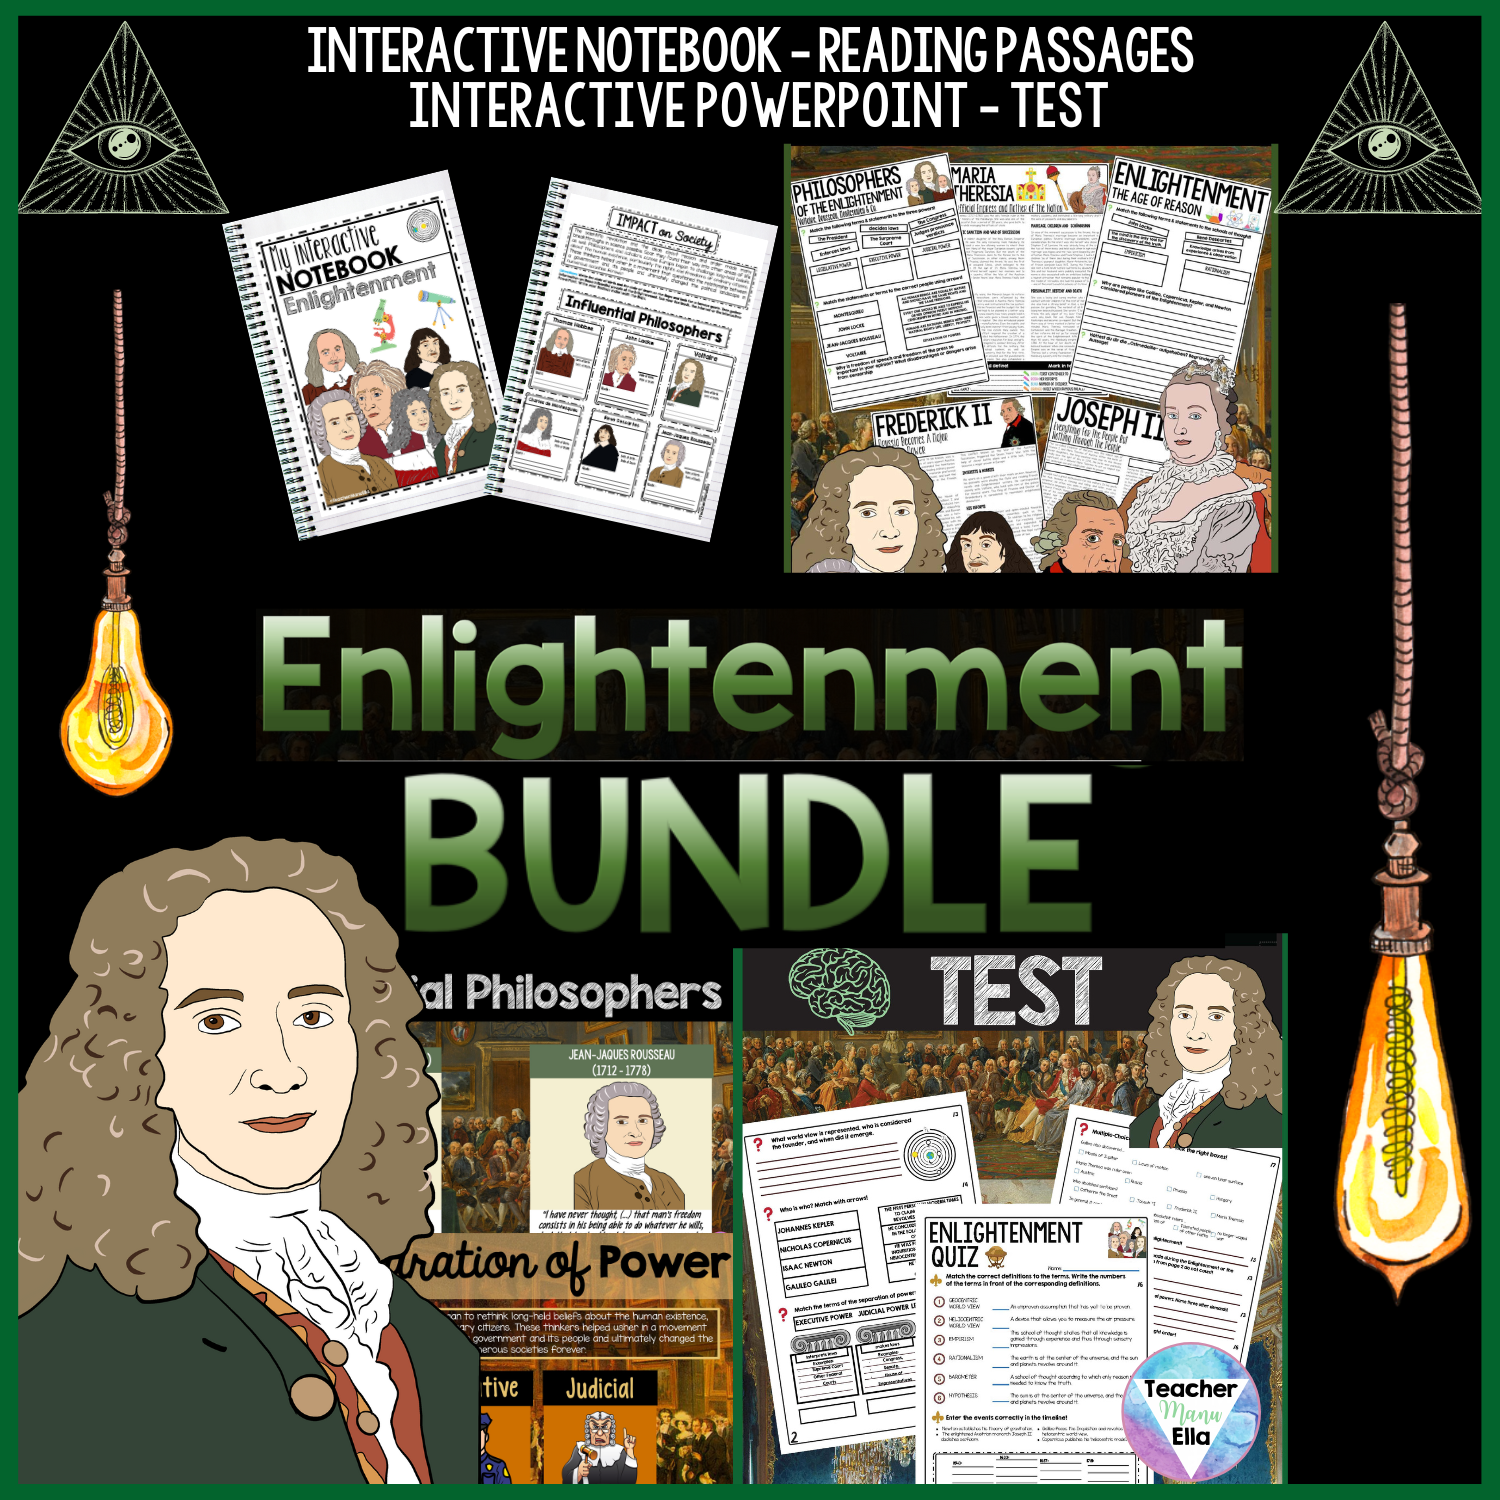 Enlightenment and the Scientific Revolution Unit Bundle - Teaching Resource by TeacherManuella